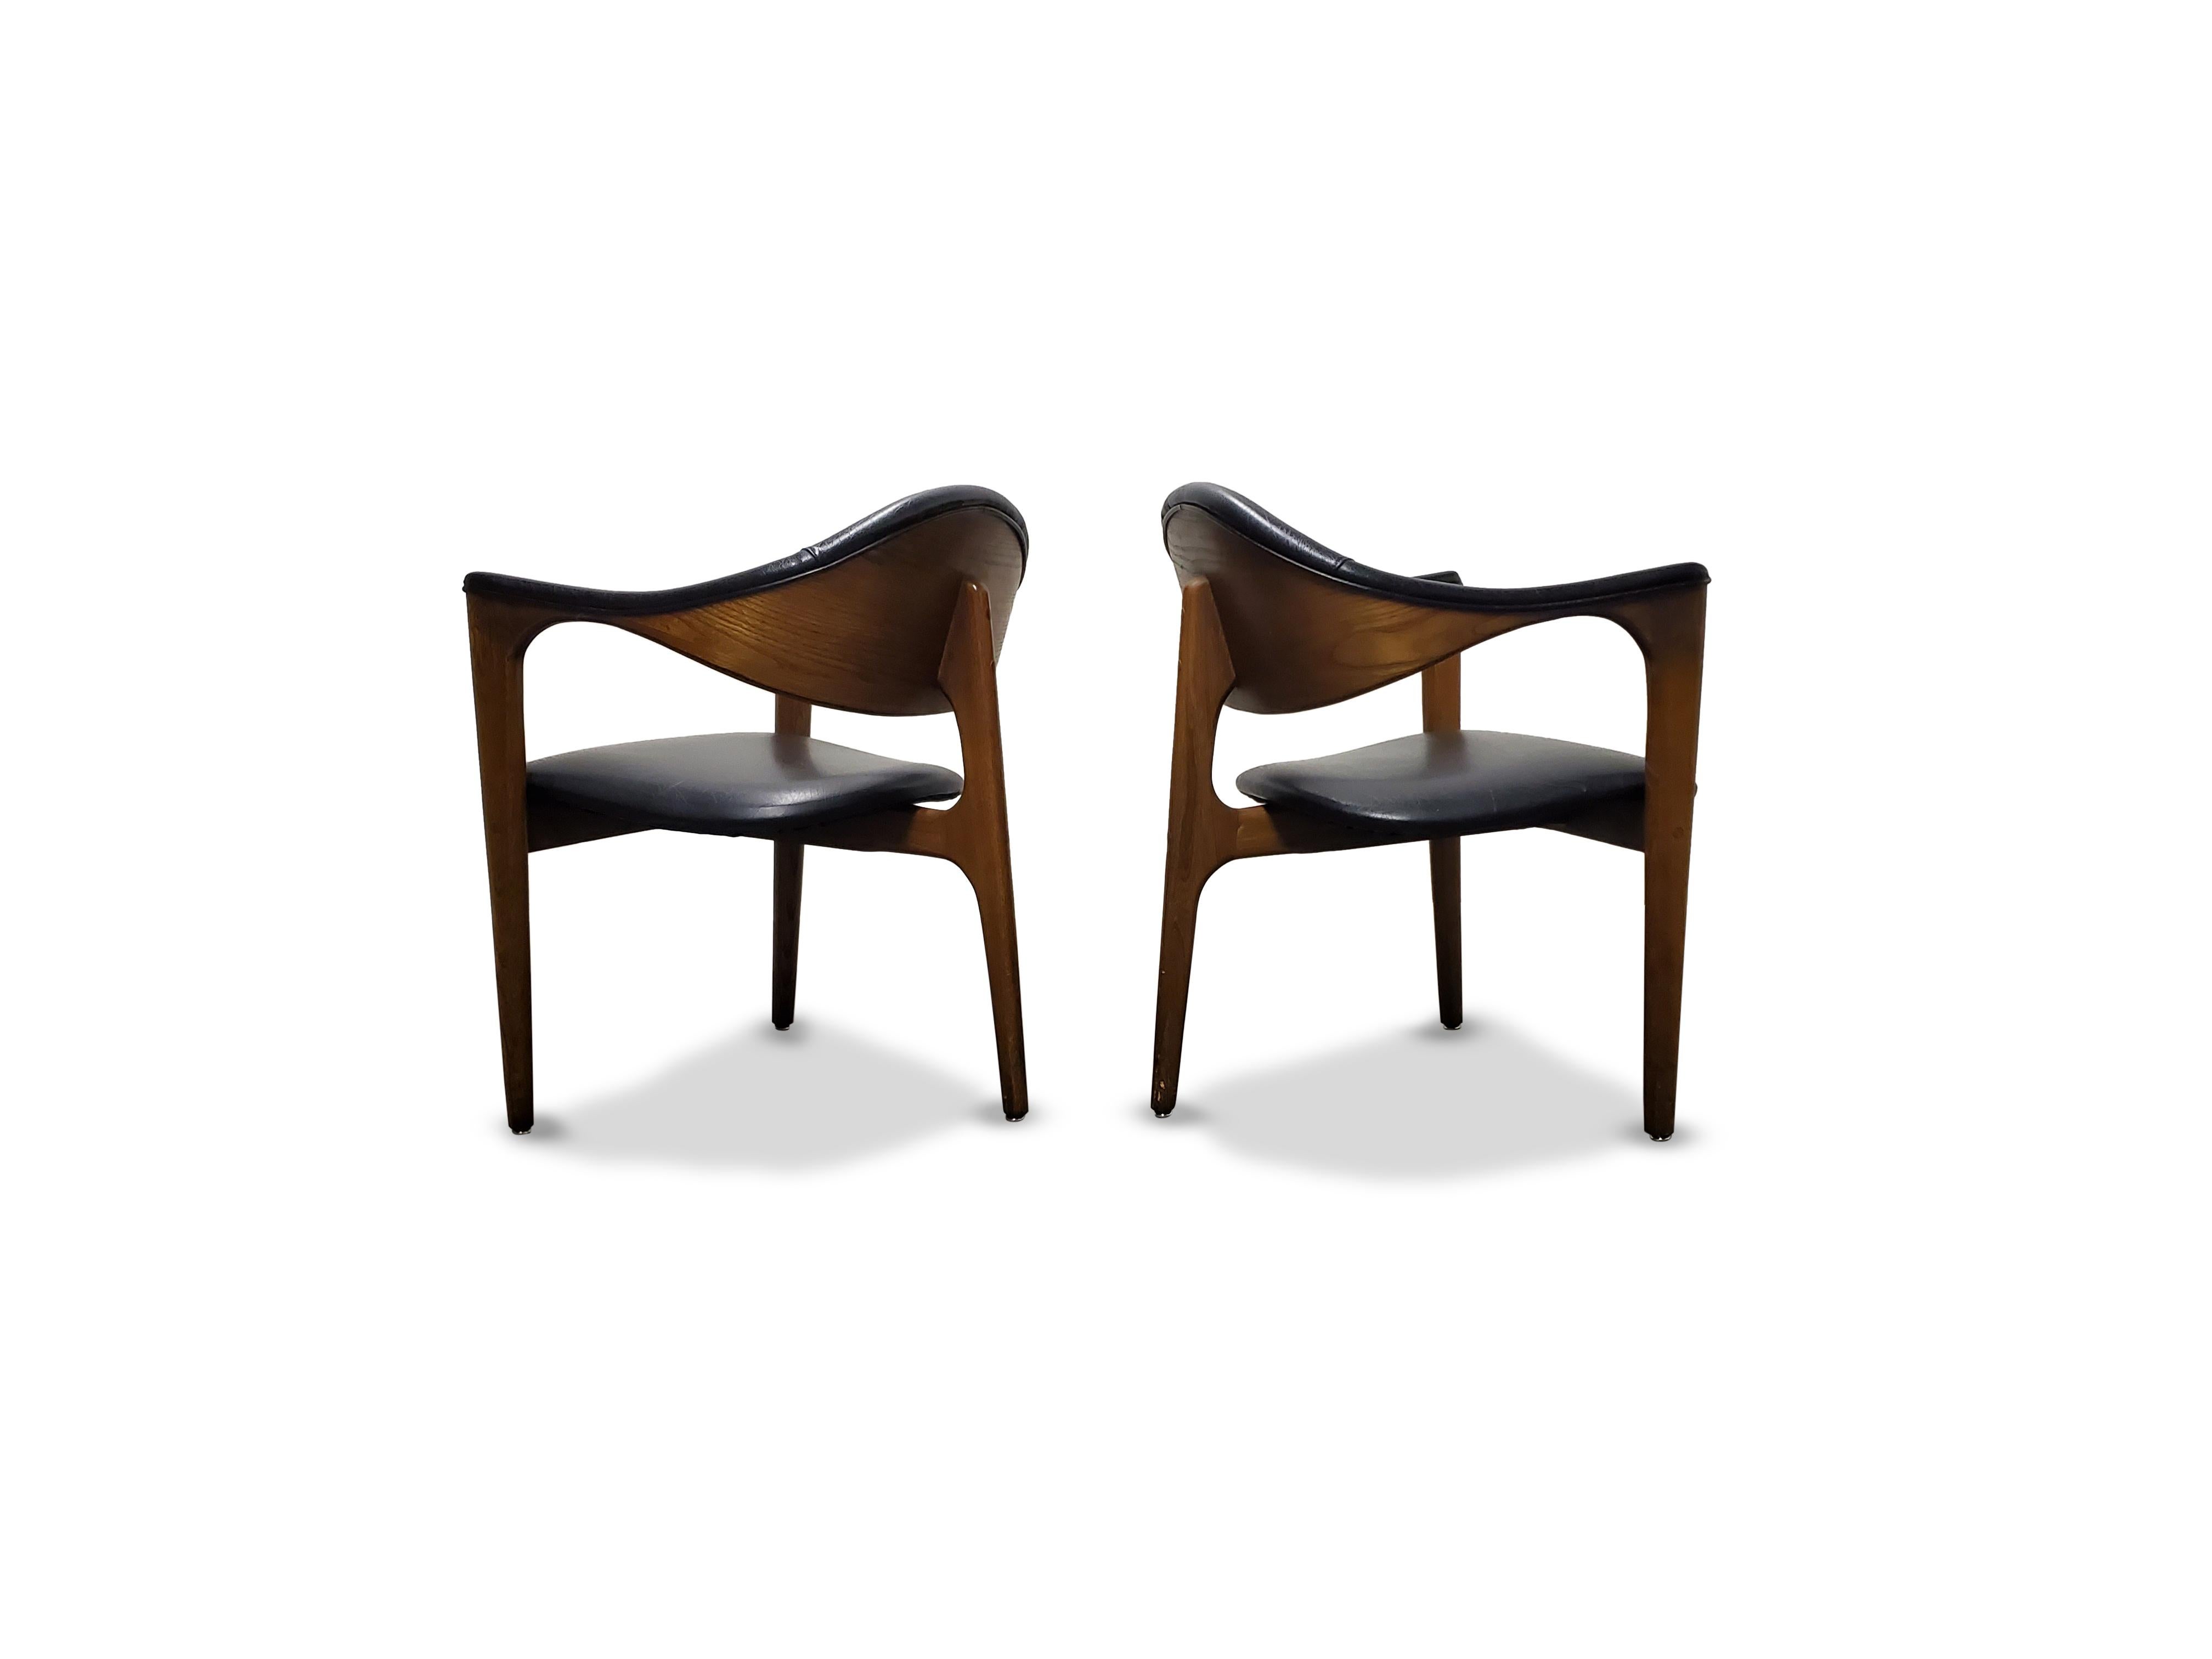 20th Century Pair of Mid-Century Modern Three-Legged Chairs